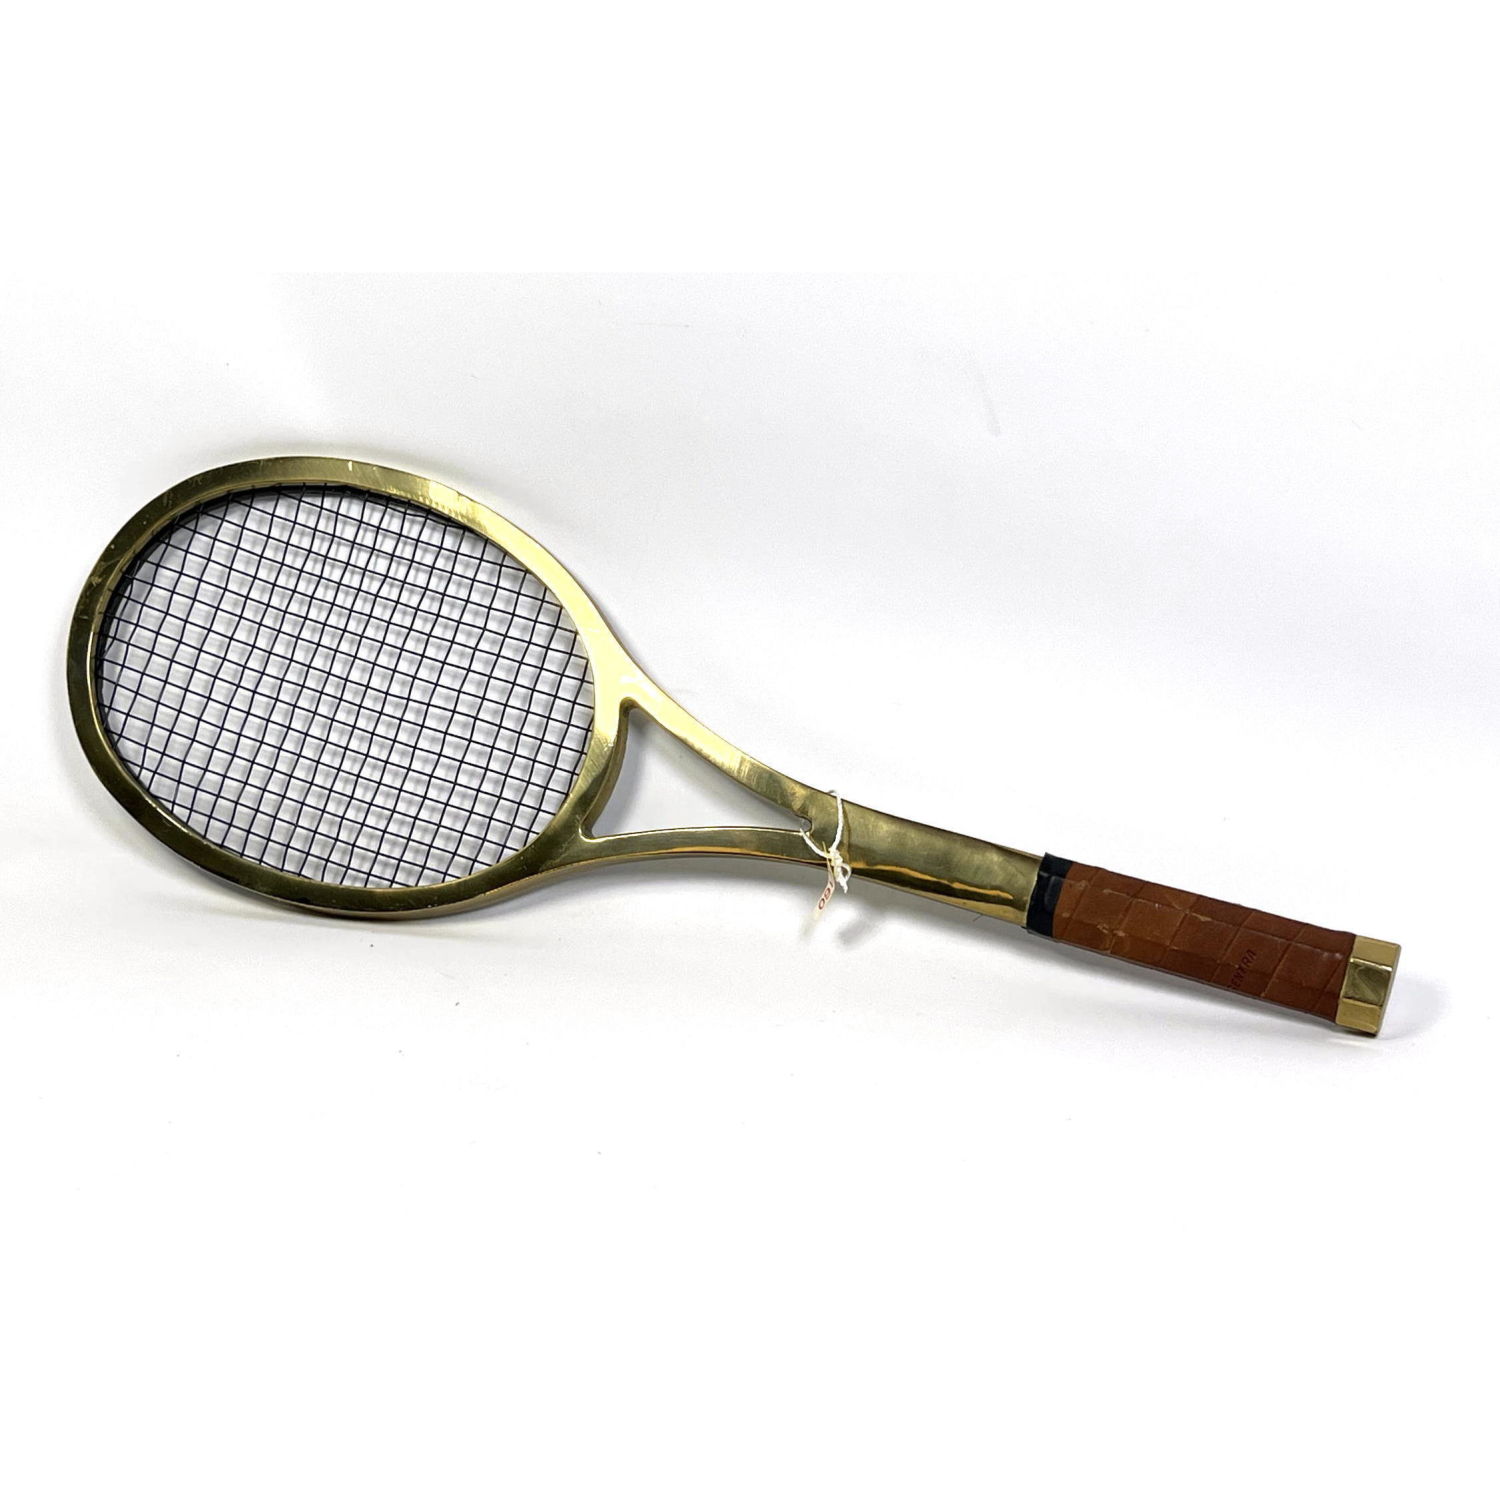 Decorator Brass Tennis Racket.